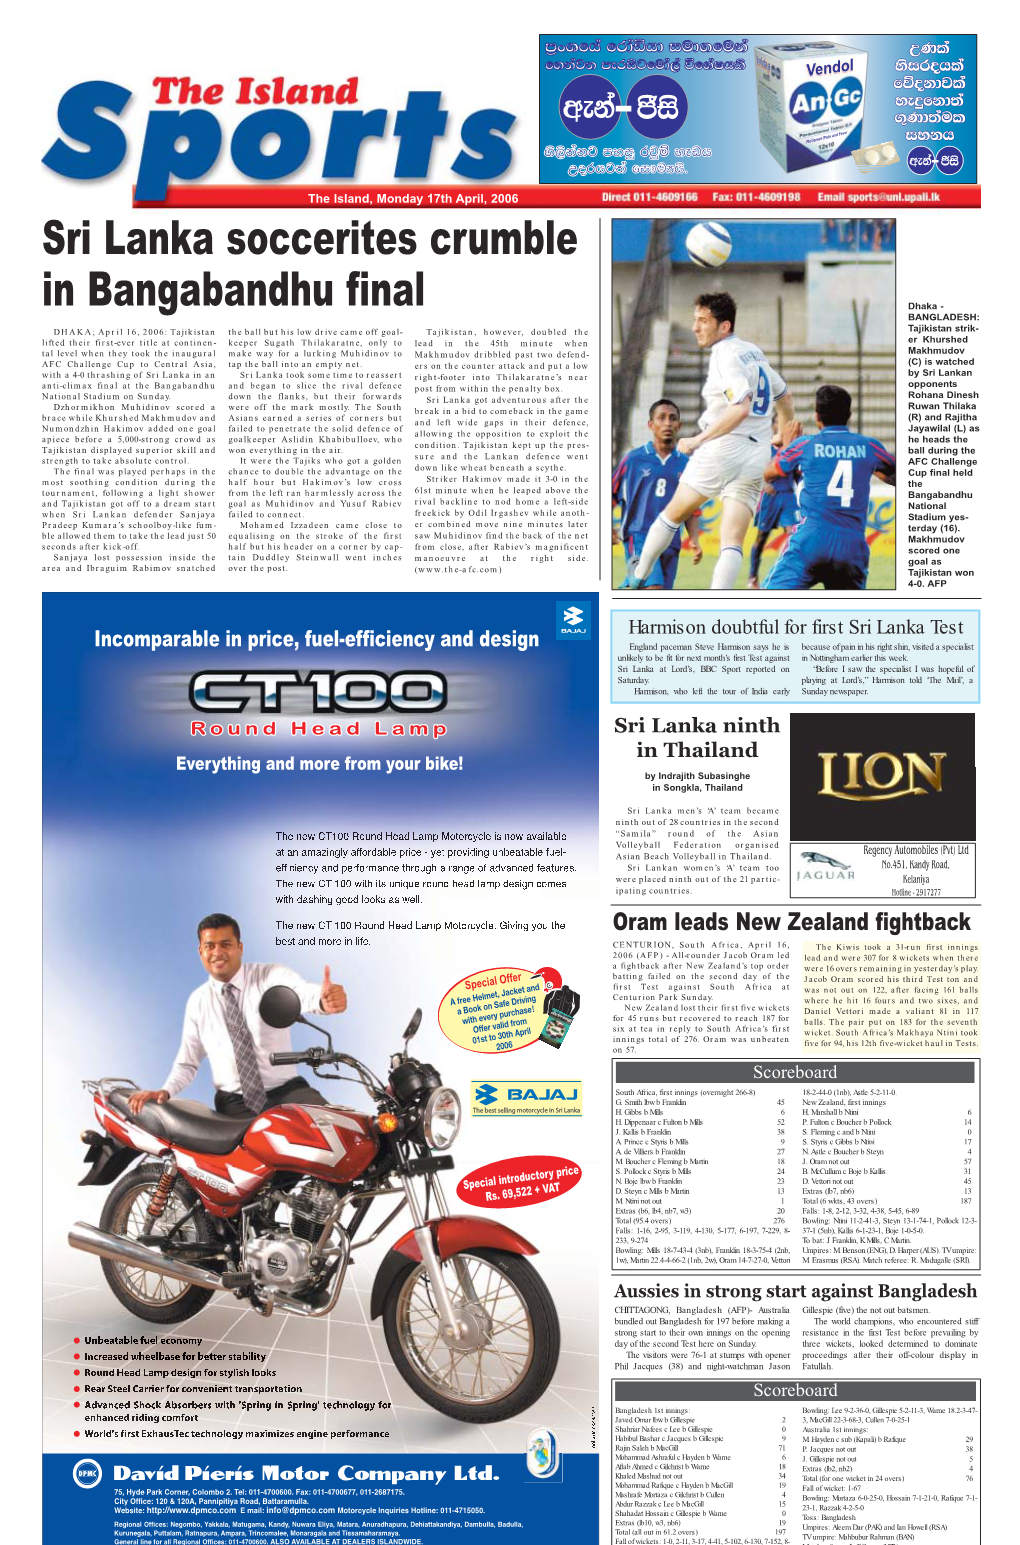 Sri Lanka Soccerites Crumble in Bangabandhu Final